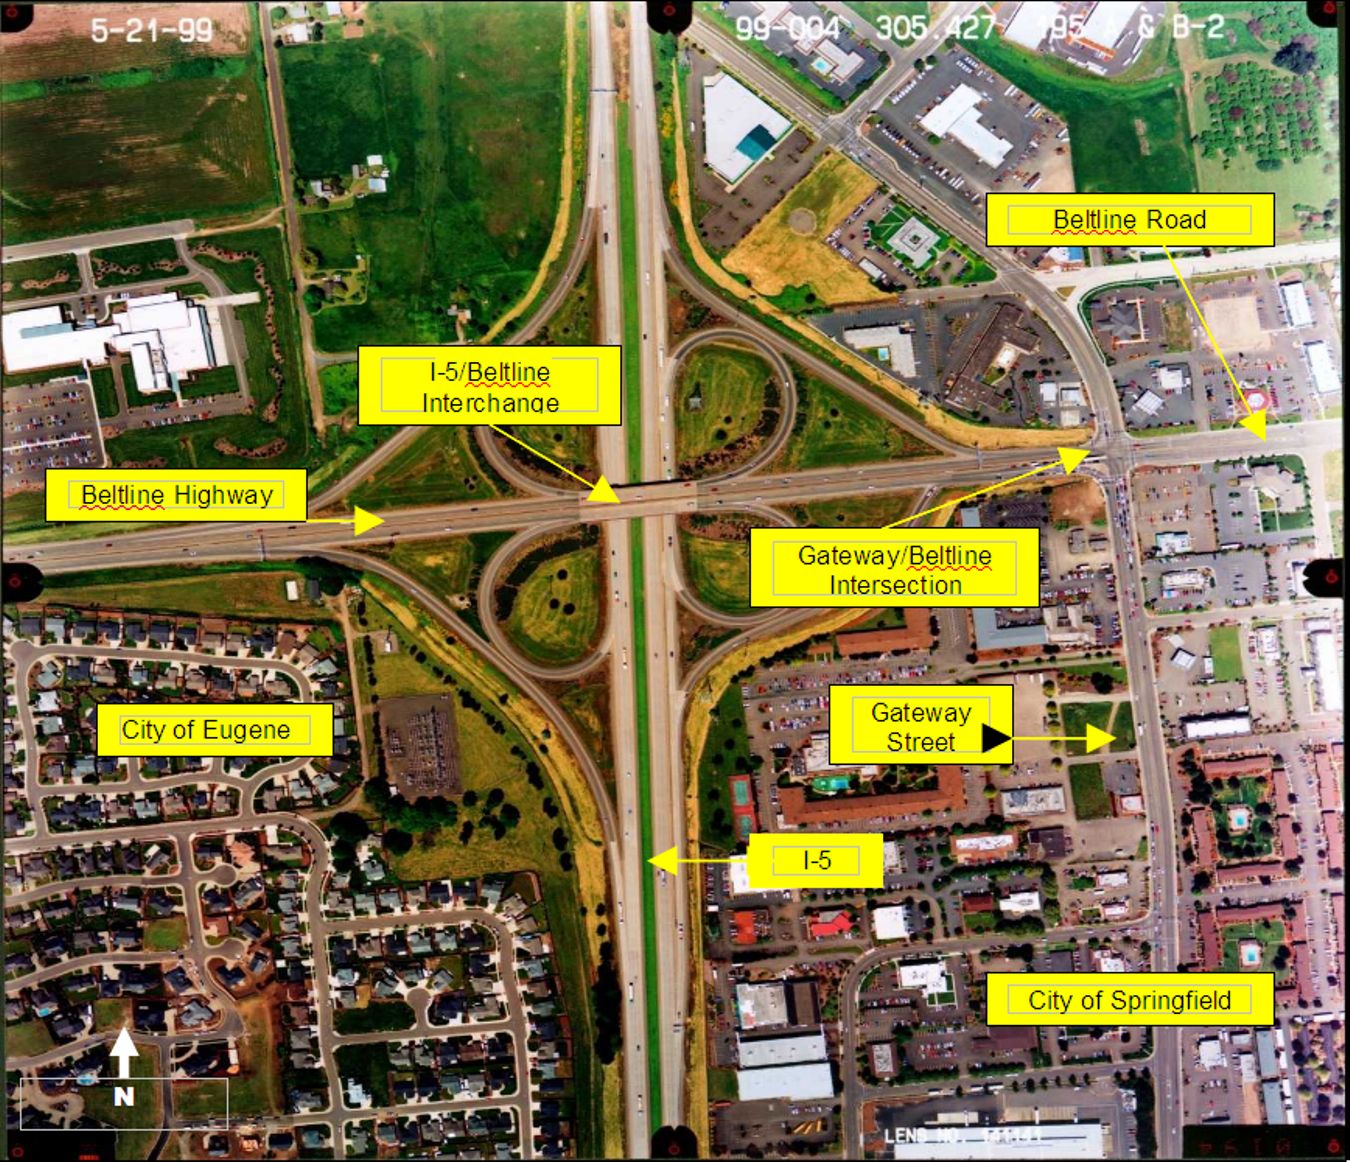 Aerial View of the I-5/Beltline Interchange Area